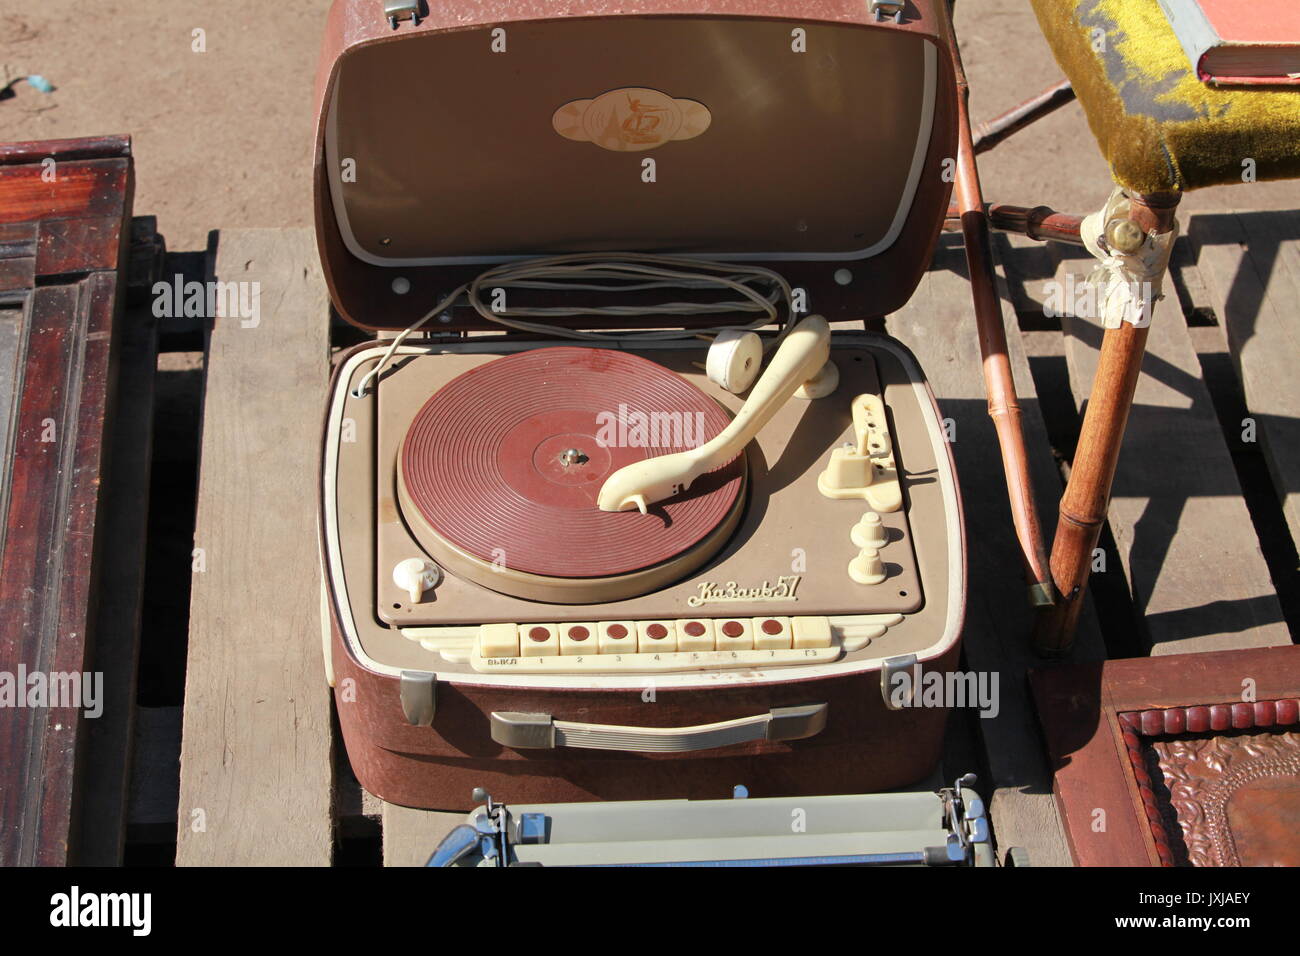 View Larger Imagesharedesign Mini Retro Turntable Phonograph Car